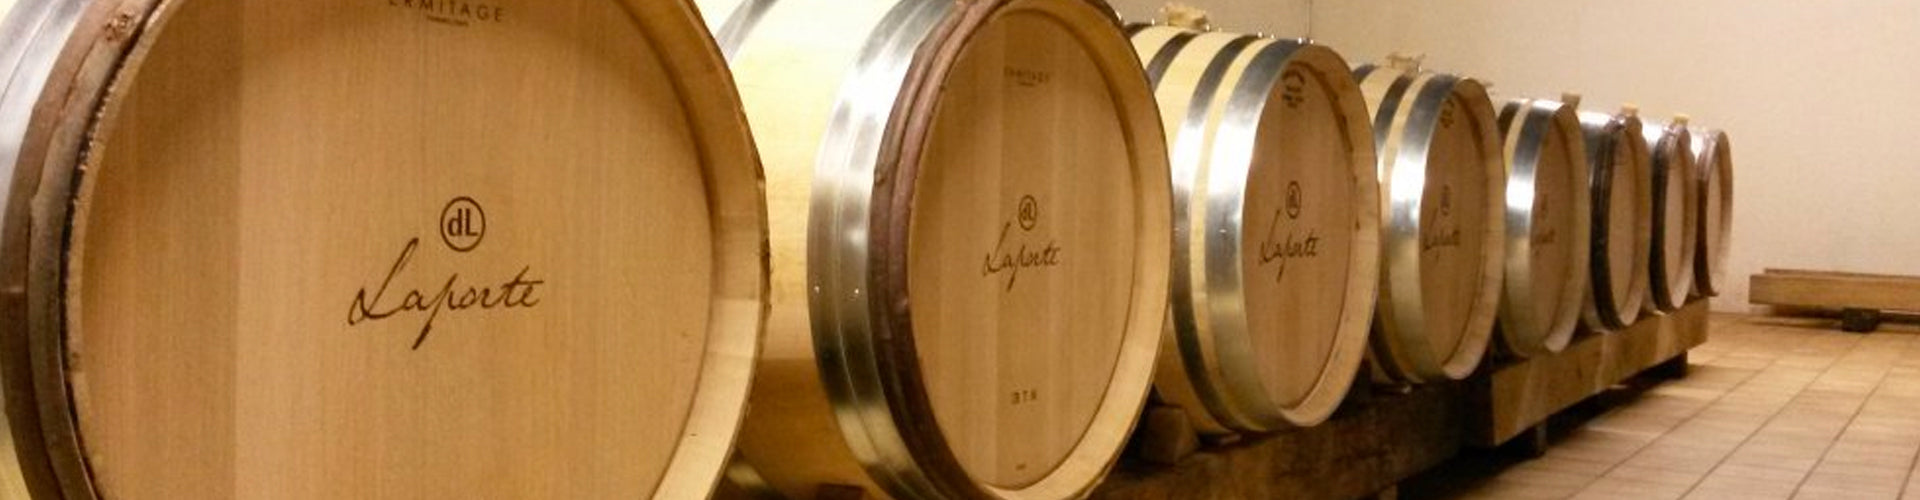 Domaine Laporte Barrels in Winery